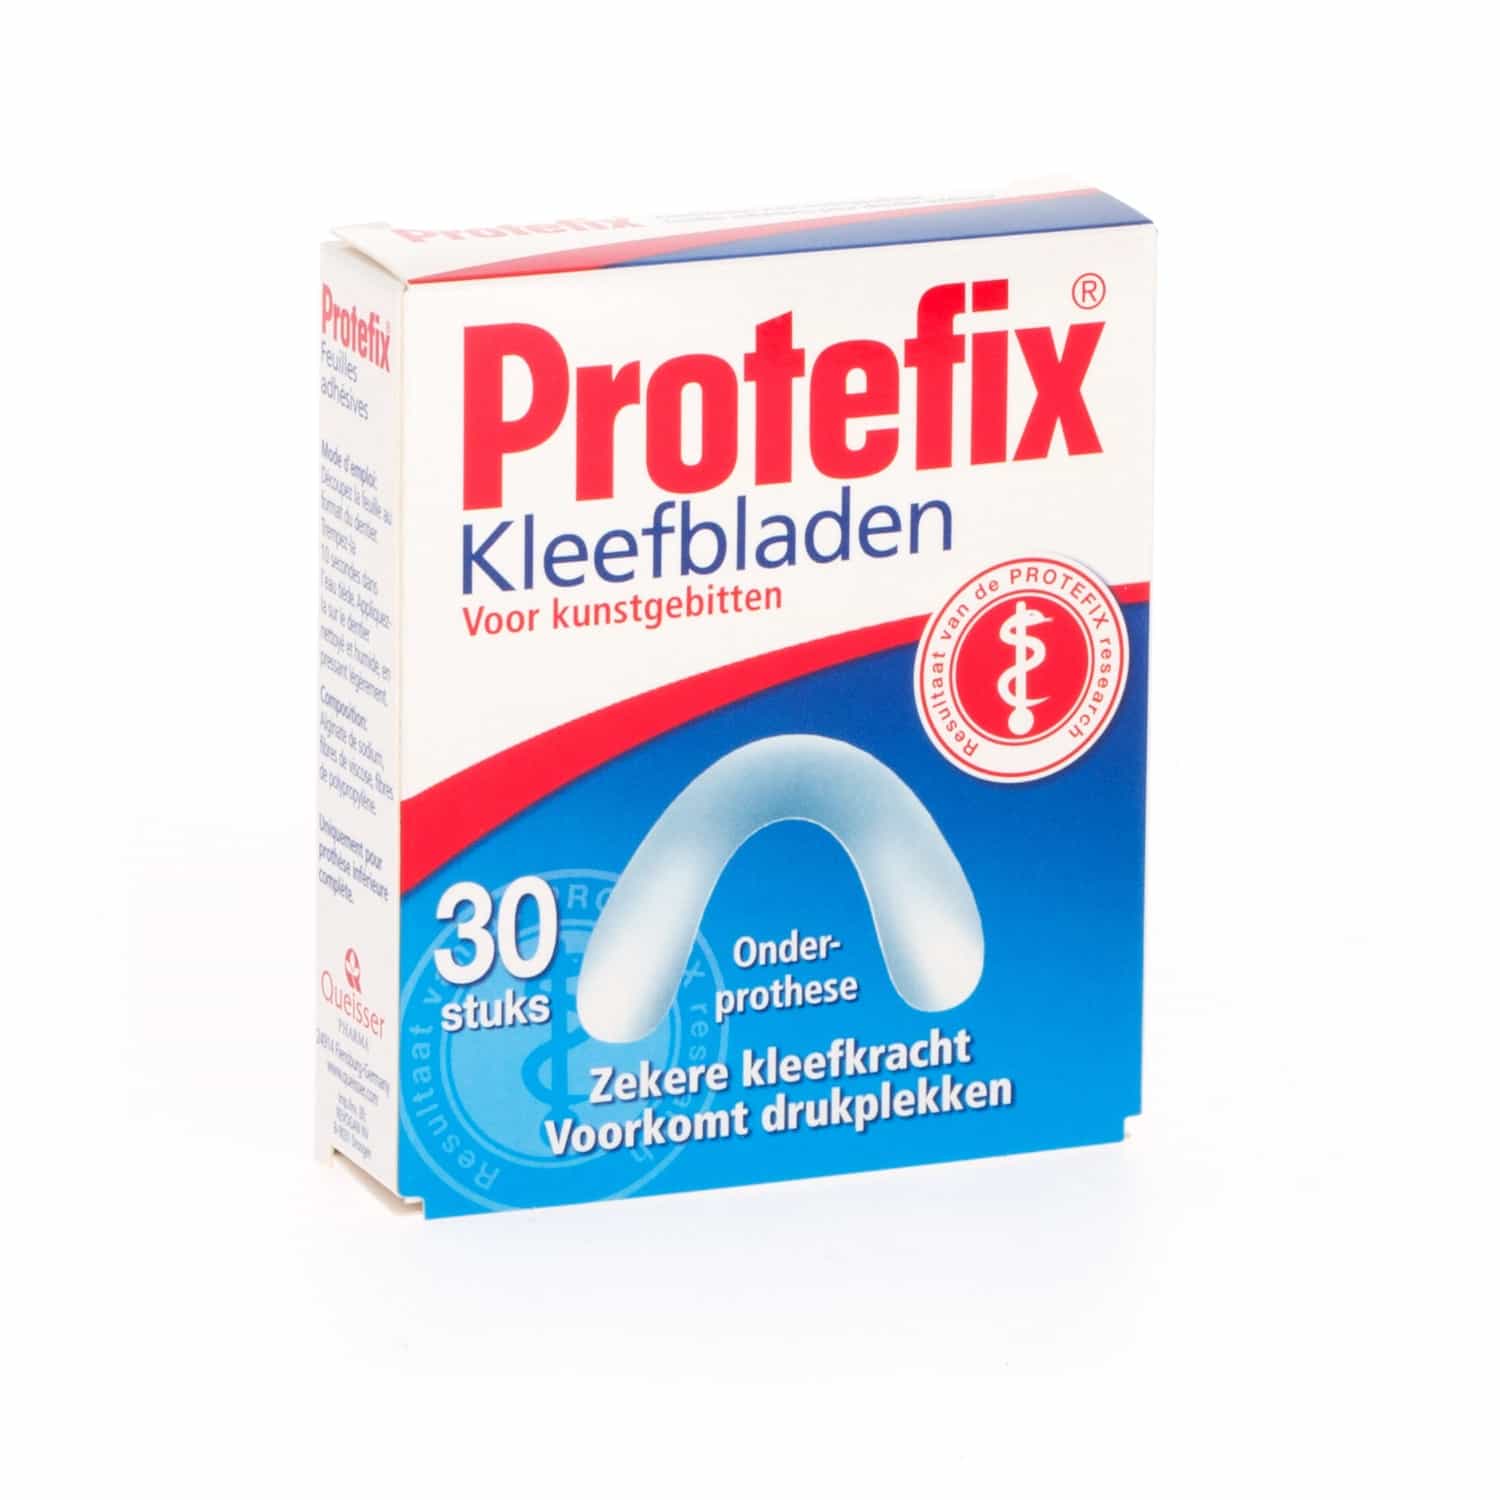 Protefix Kleefblad Onderprothese